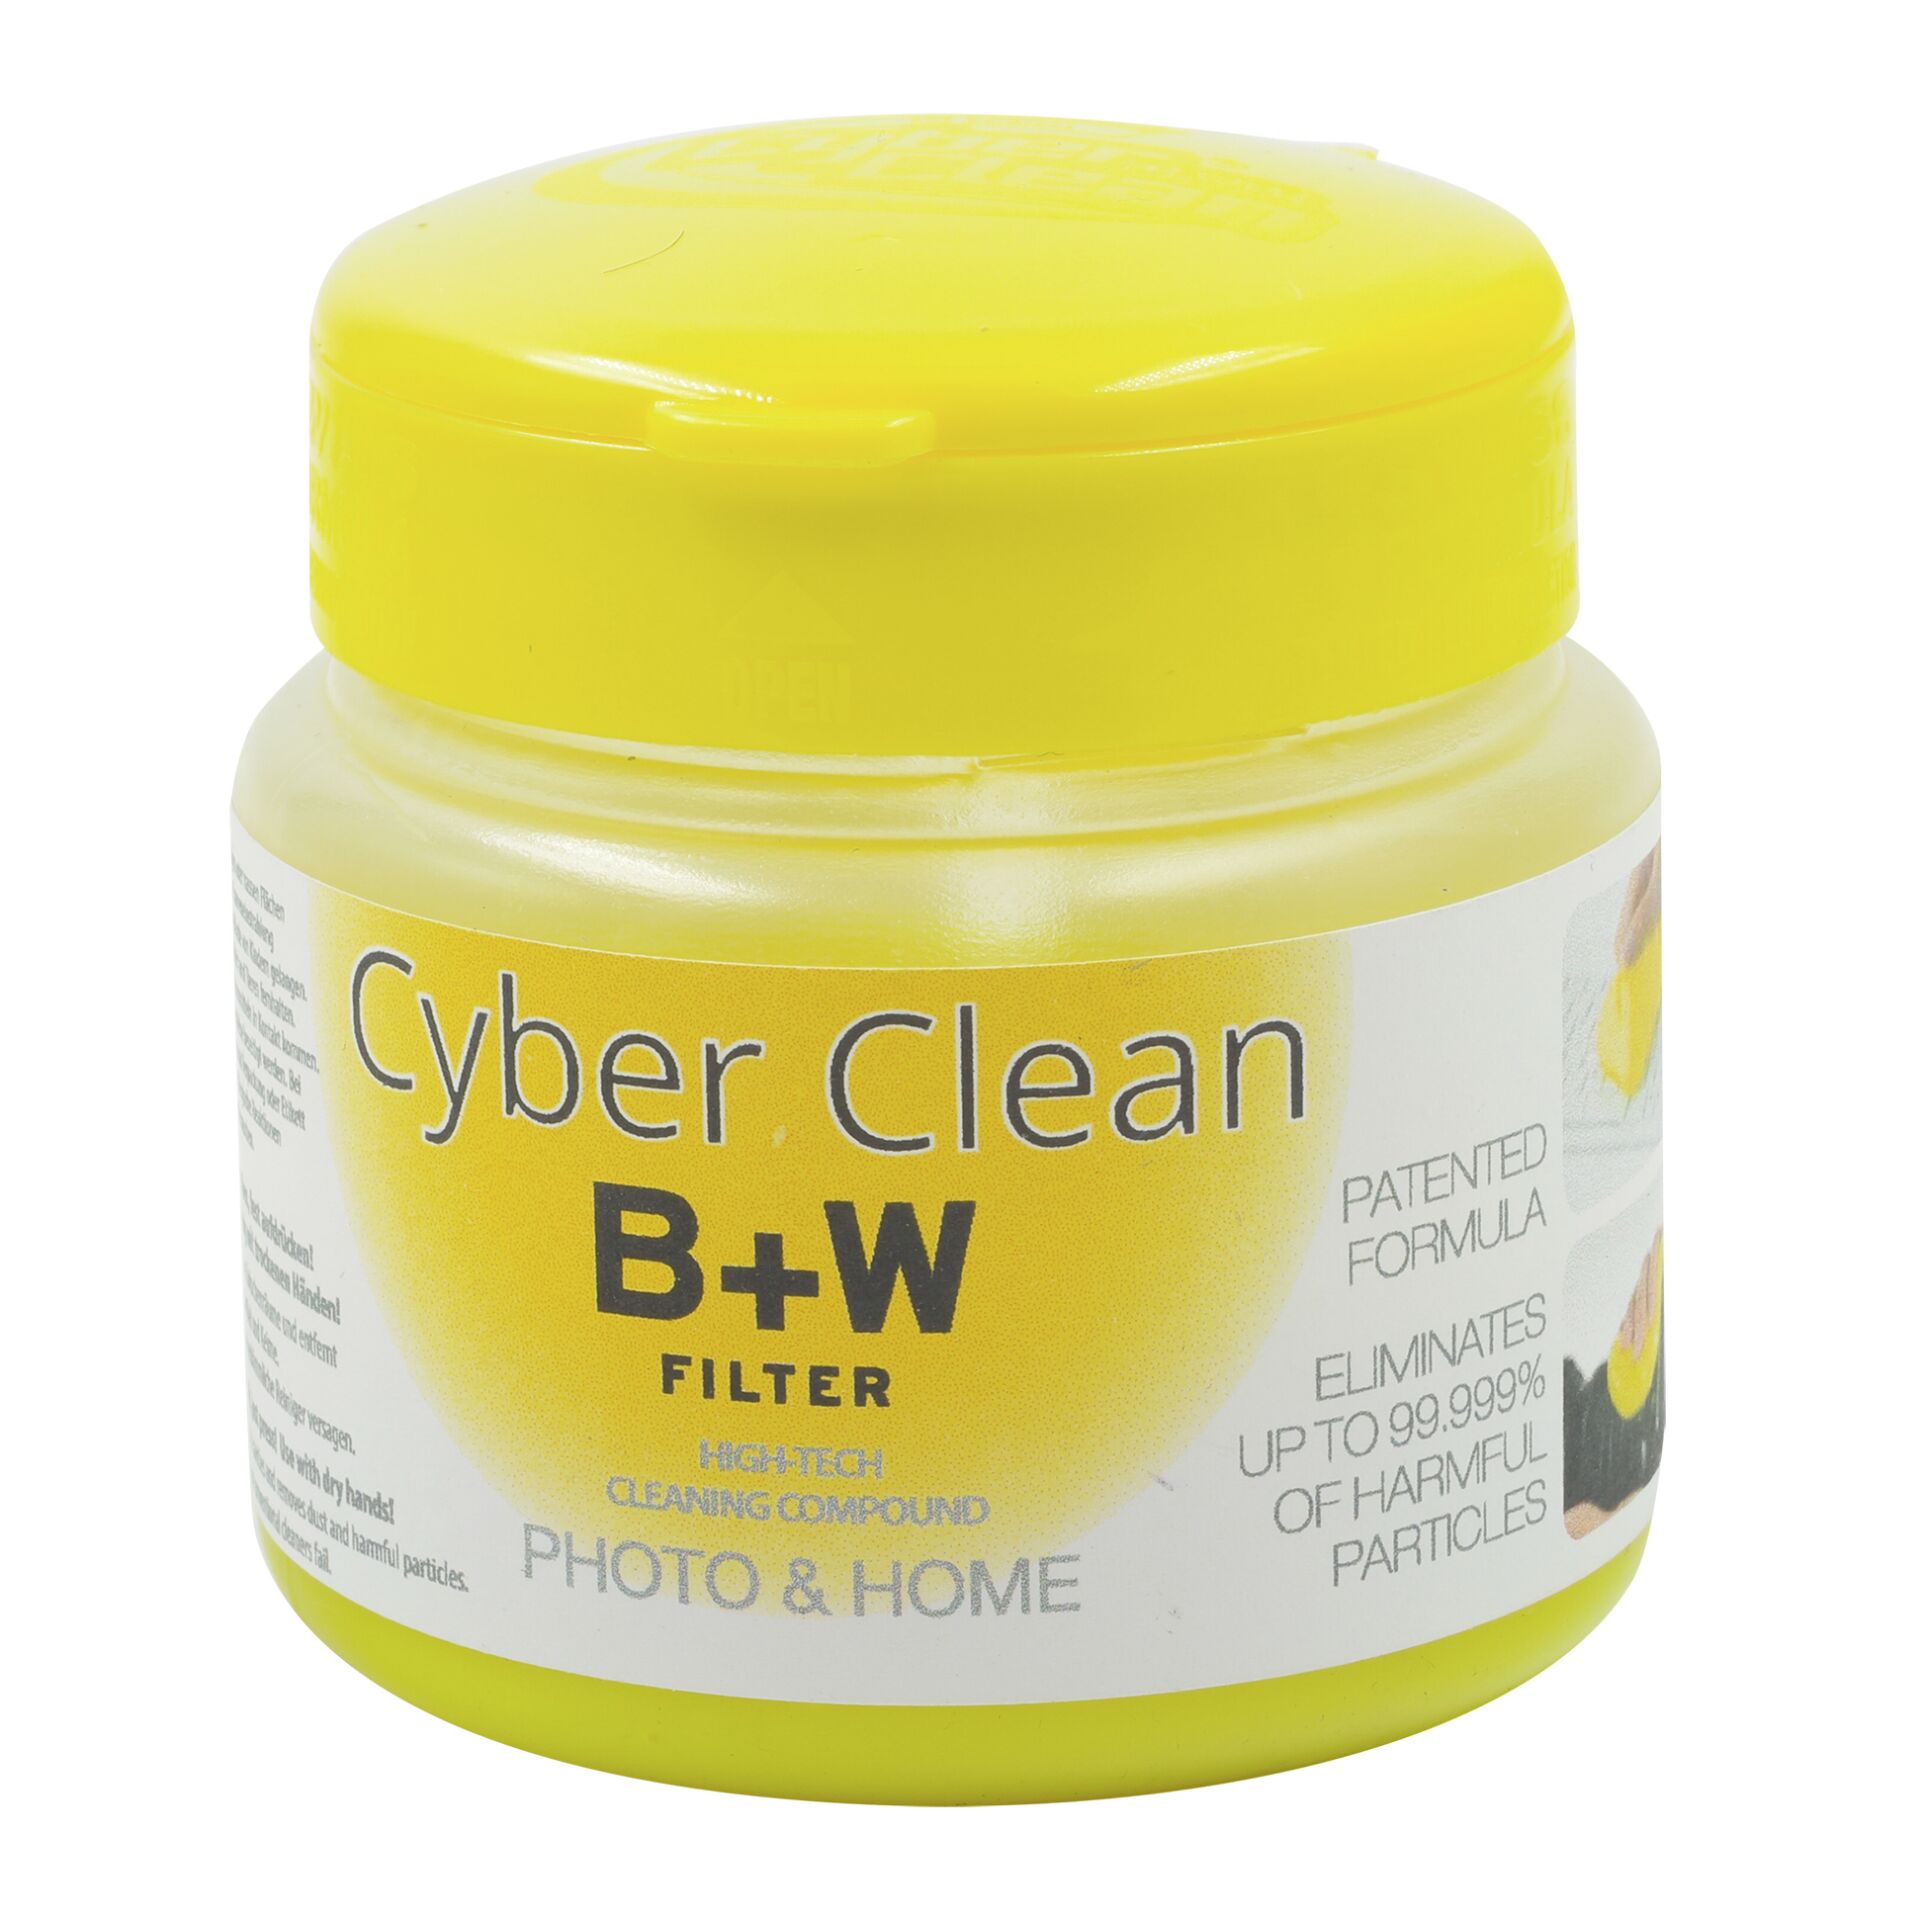 1x12 B+W Cyber Clean yellow